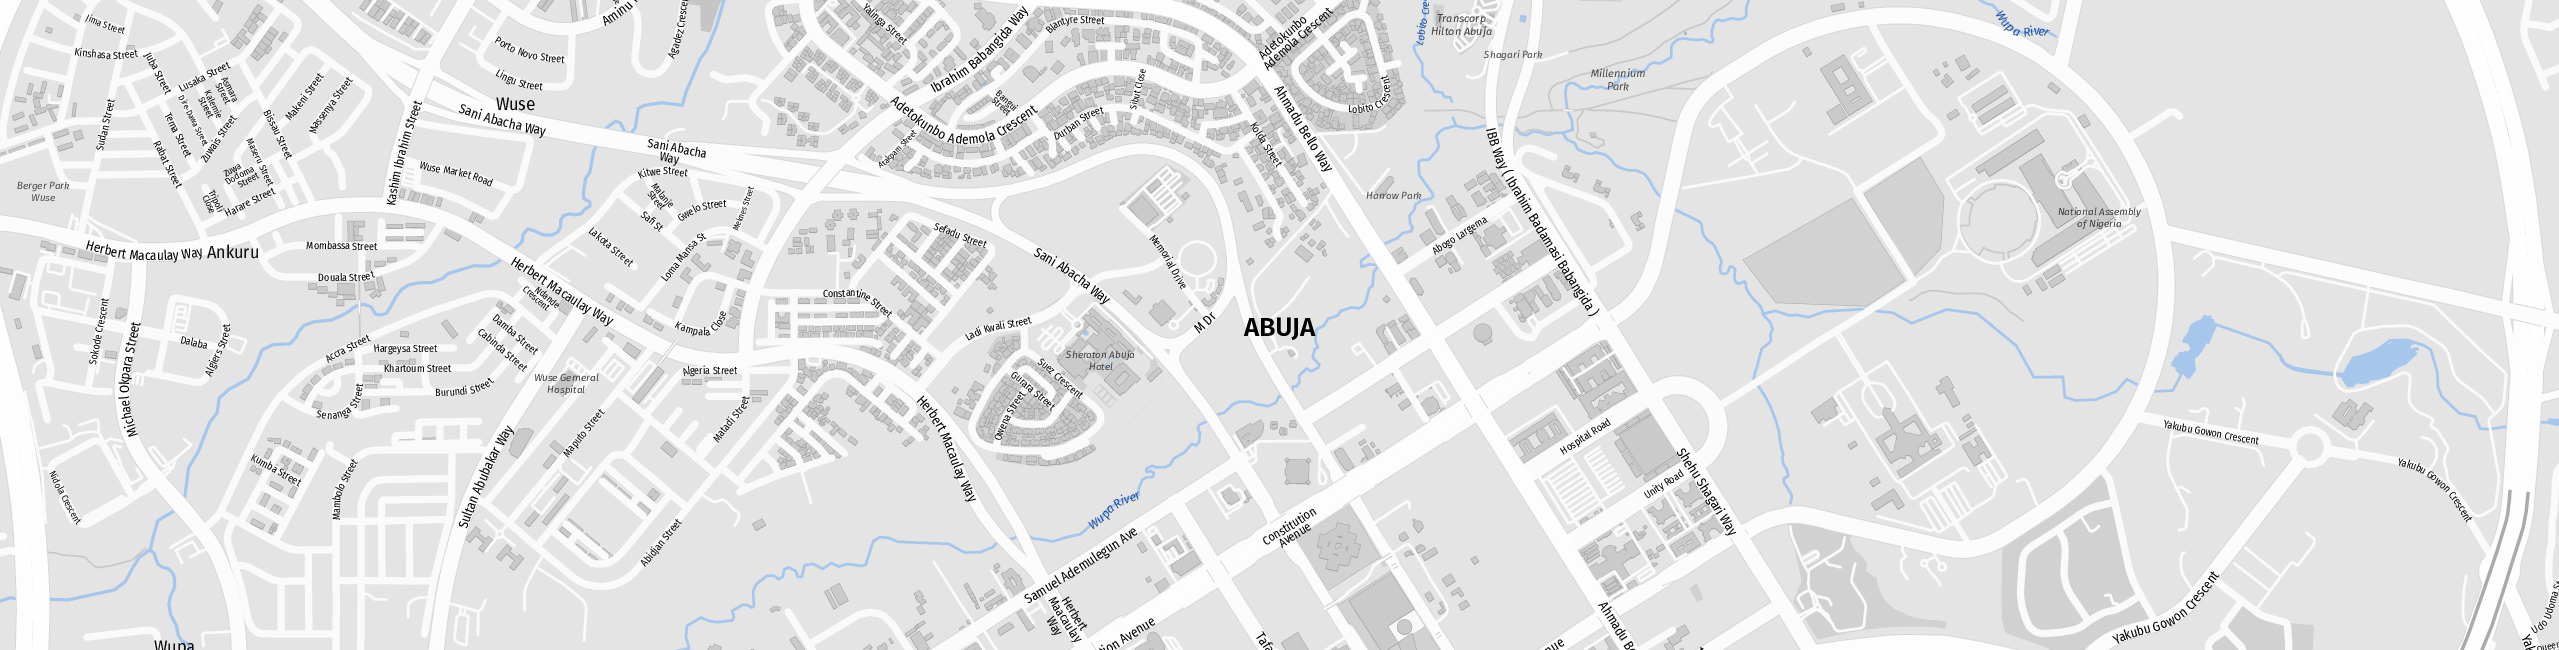 Stadtplan Abuja zum Downloaden.